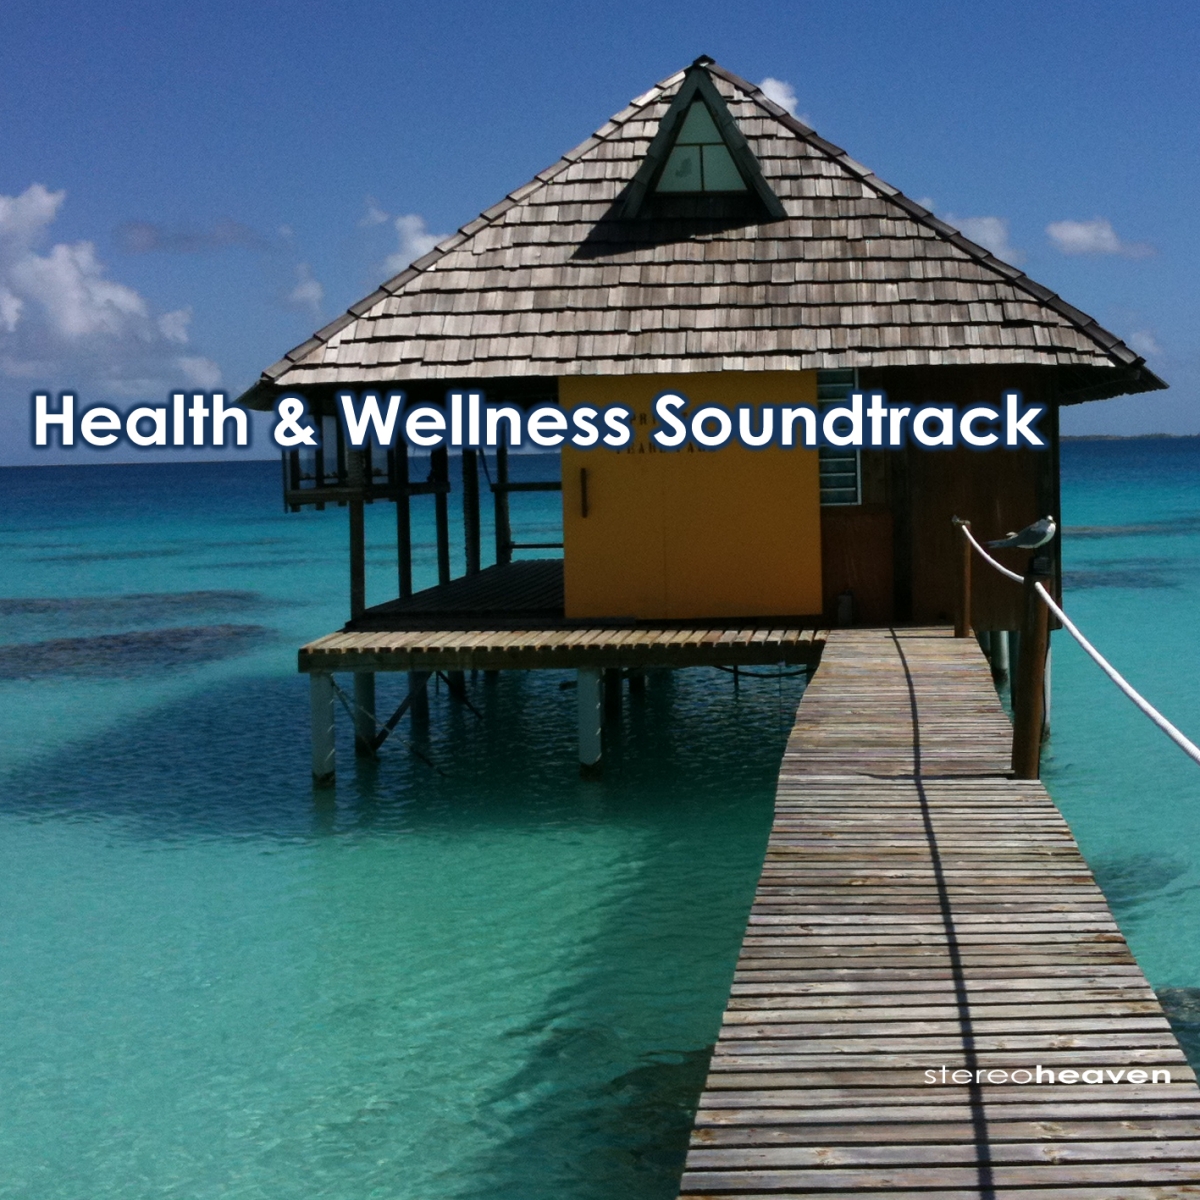 Health & Wellness Soundtrack